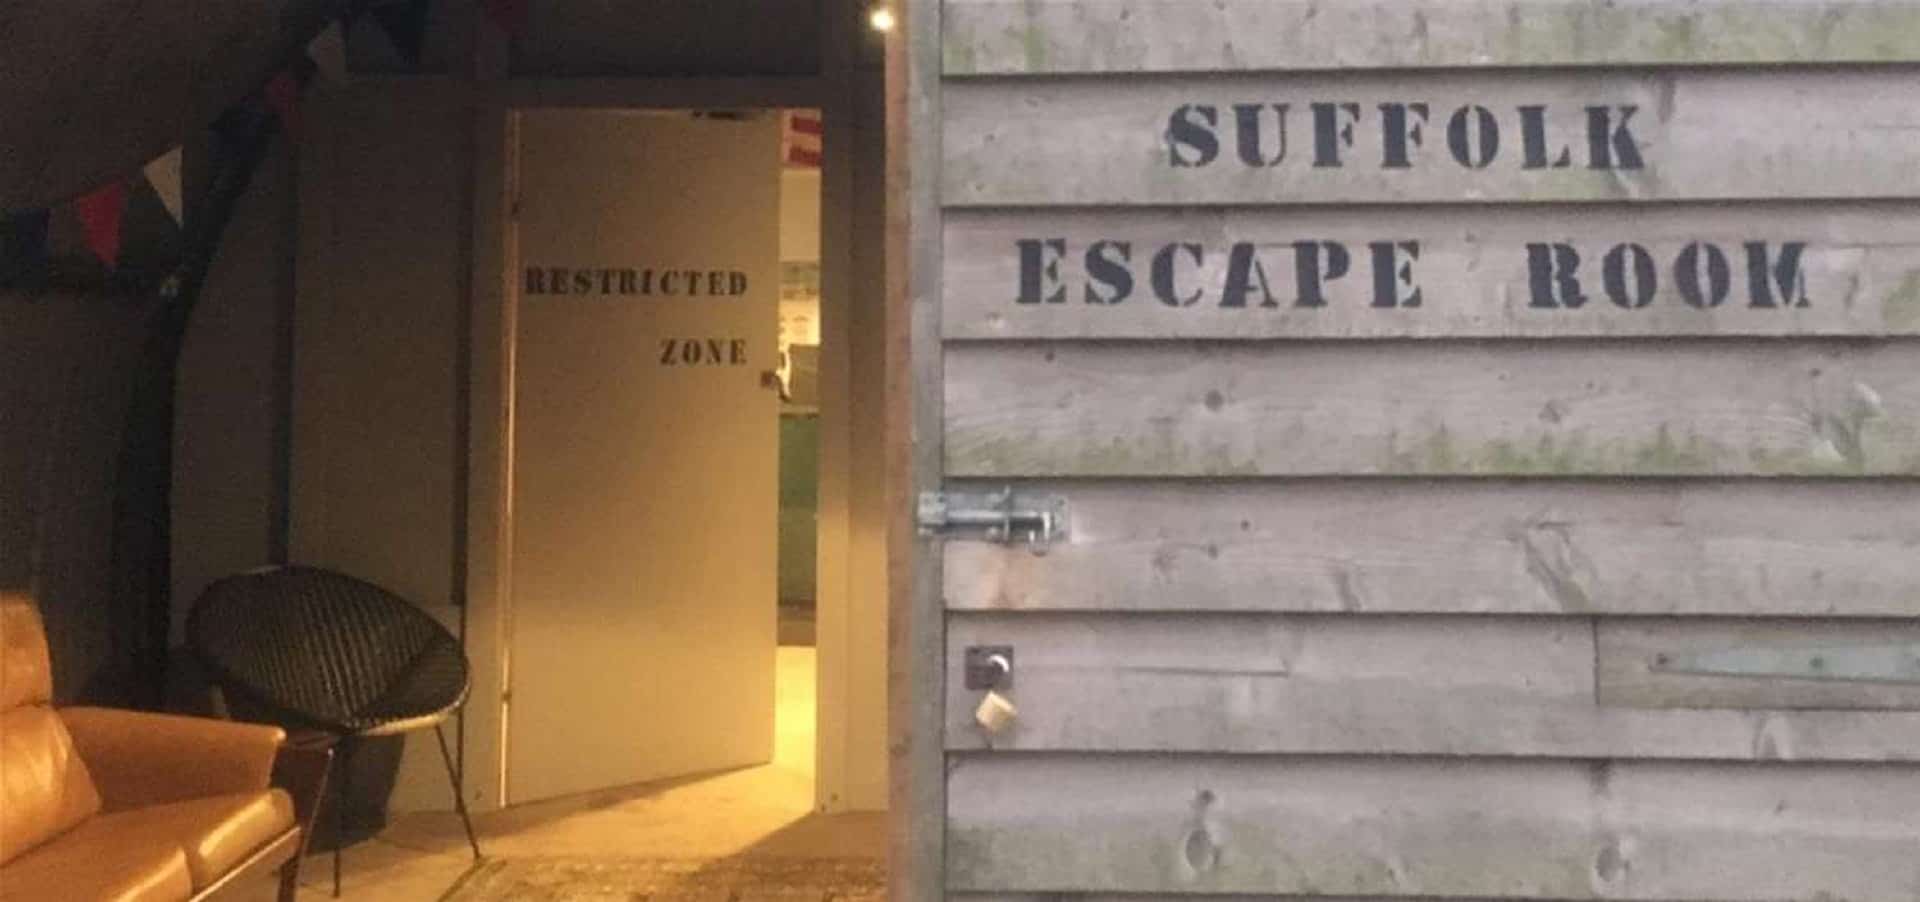 Suffolk Escape Room in UK